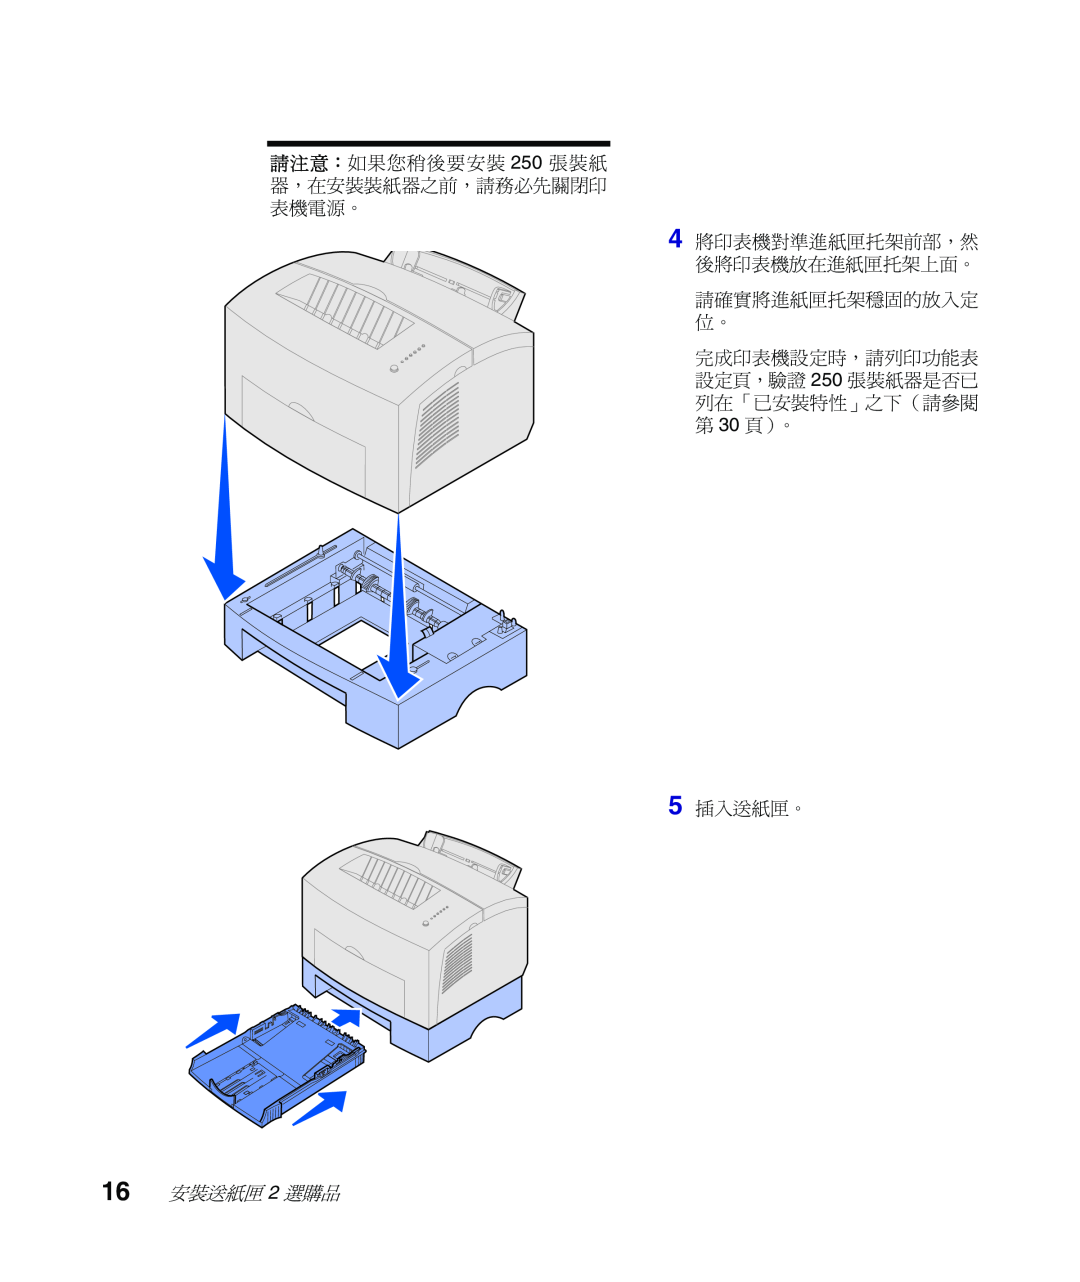 Lexmark Infoprint 1116 setup guide 5 插入送紙匣。, 16 安裝送紙匣 2 選購品, 請注意：如果您稍後要安裝 250 張裝紙 器，在安裝裝紙器之前，請務必先關閉印 表機電源。 